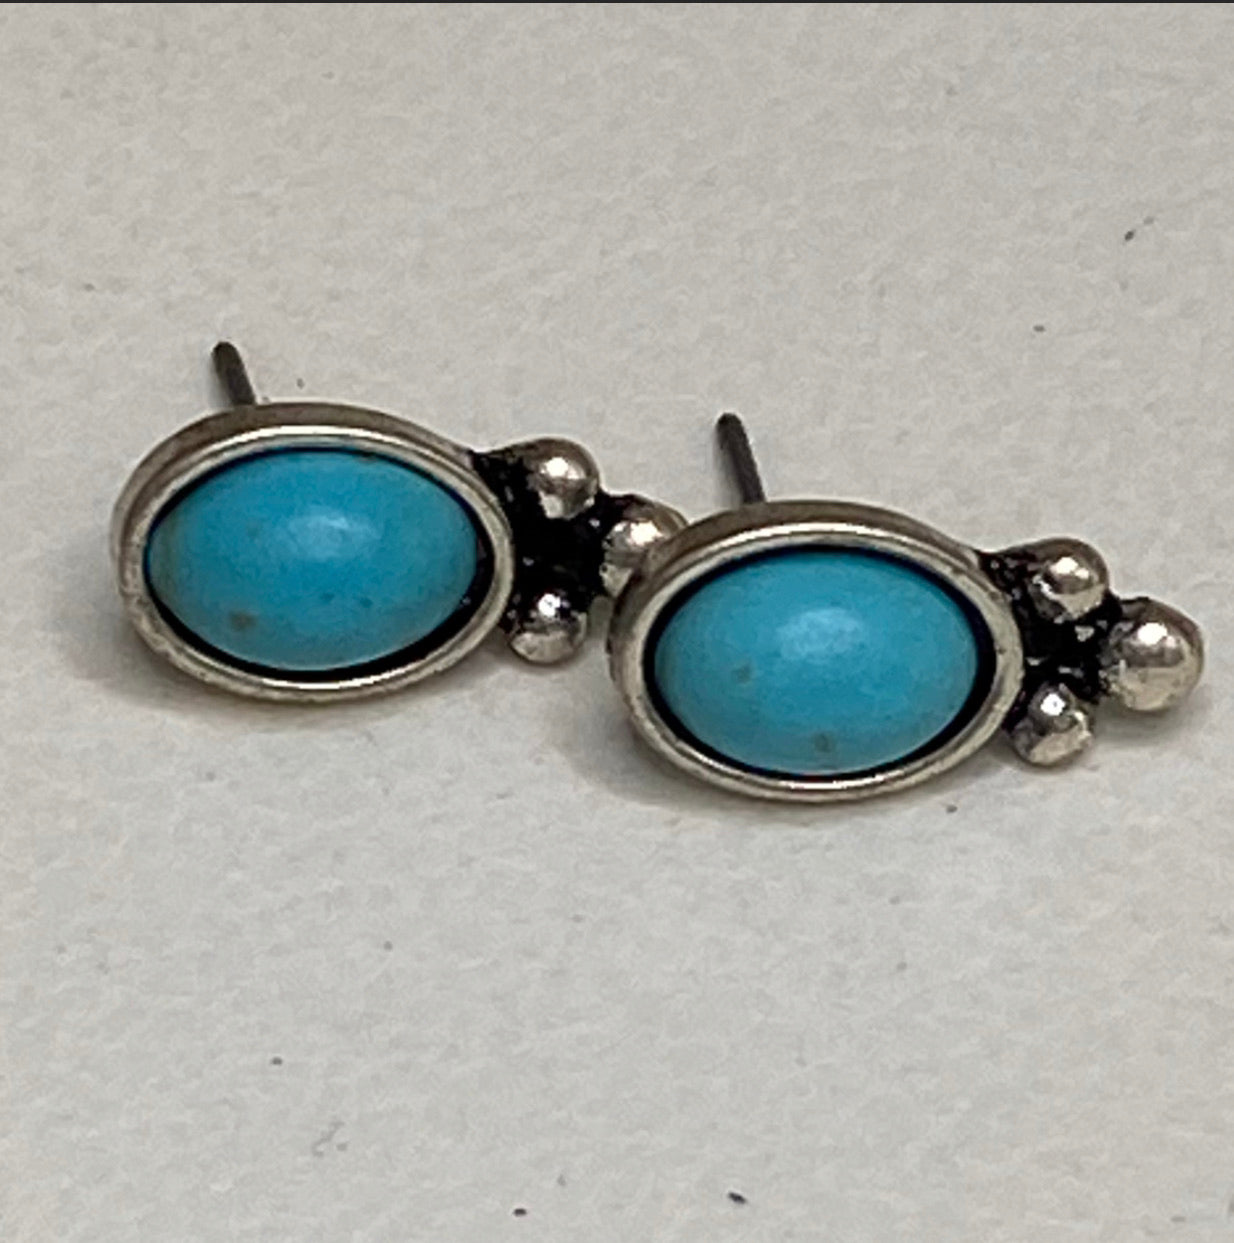 J6311a - Western Turquoise Post Stud Earrings